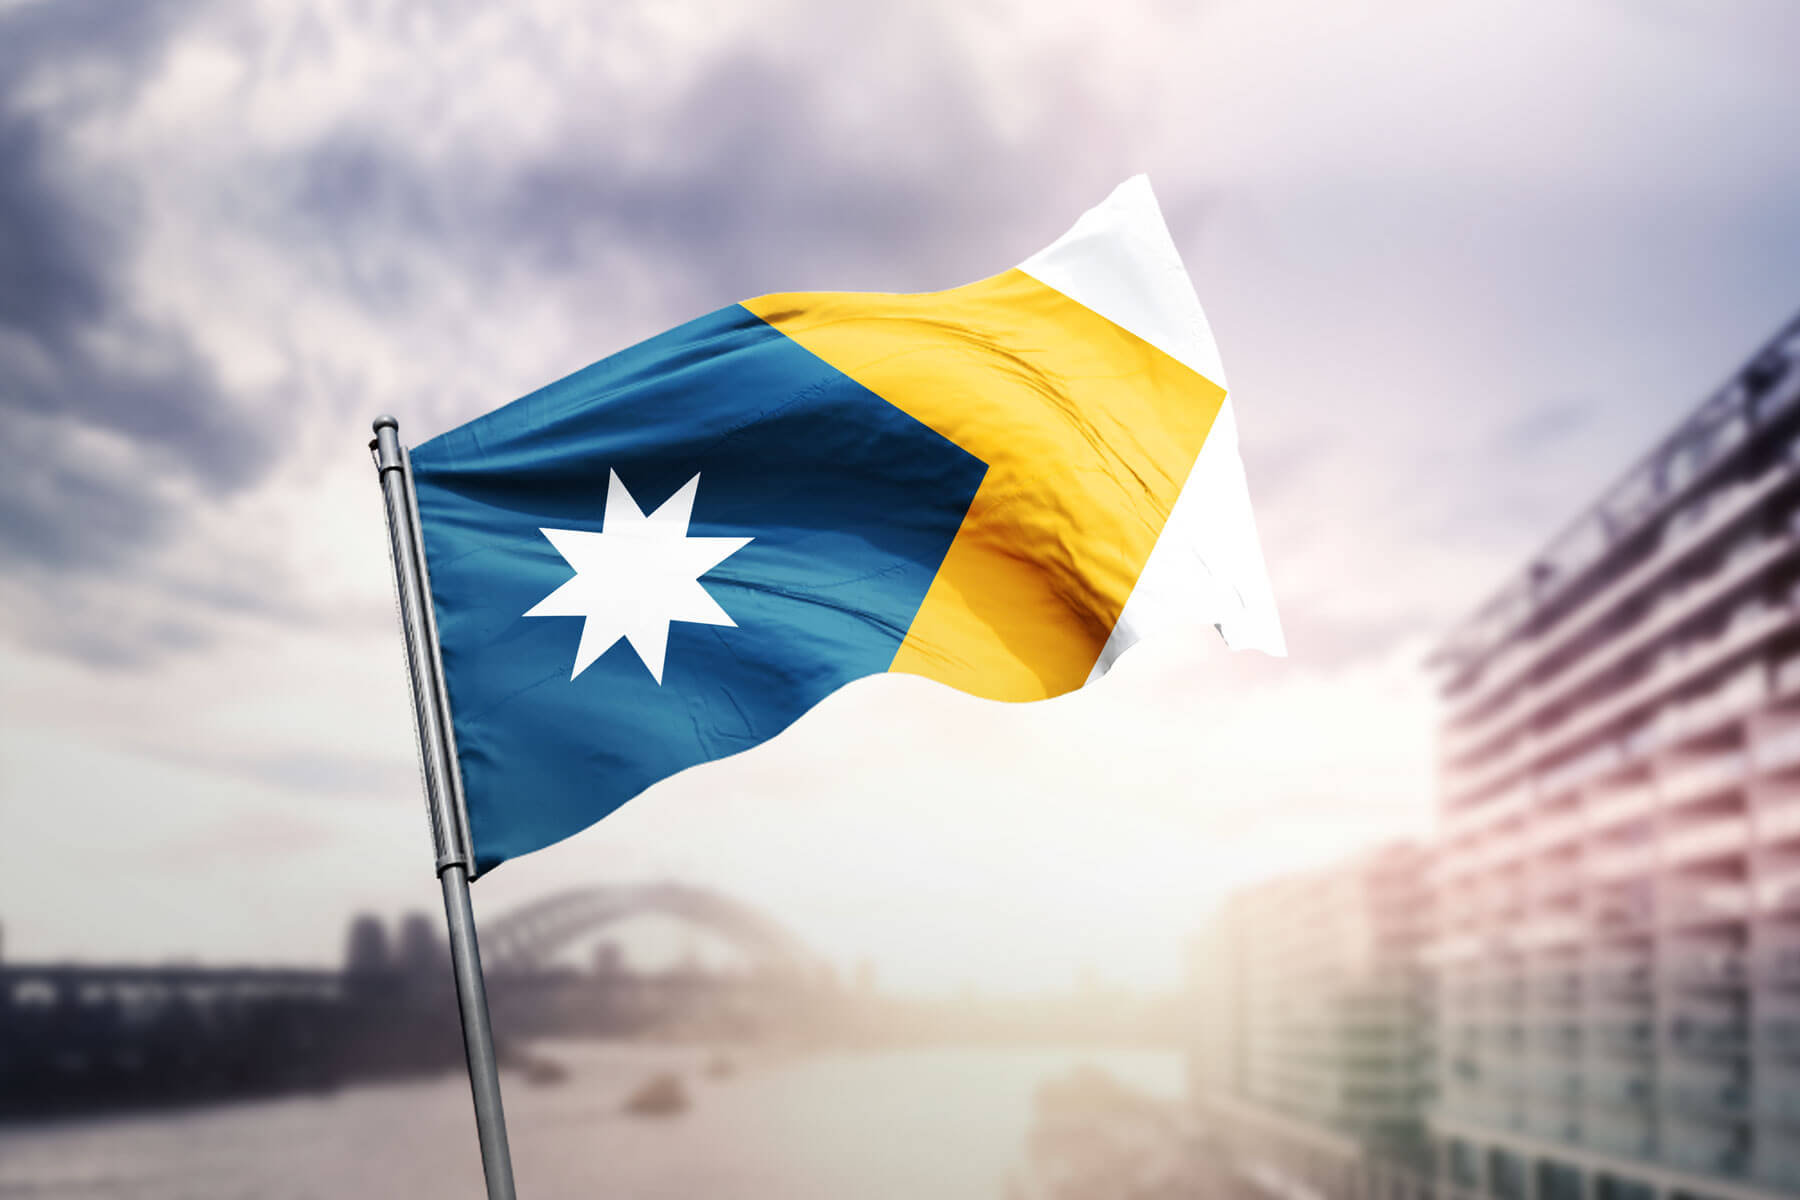 A Unity Flag flies in front of the Sydney Harbour Bridge